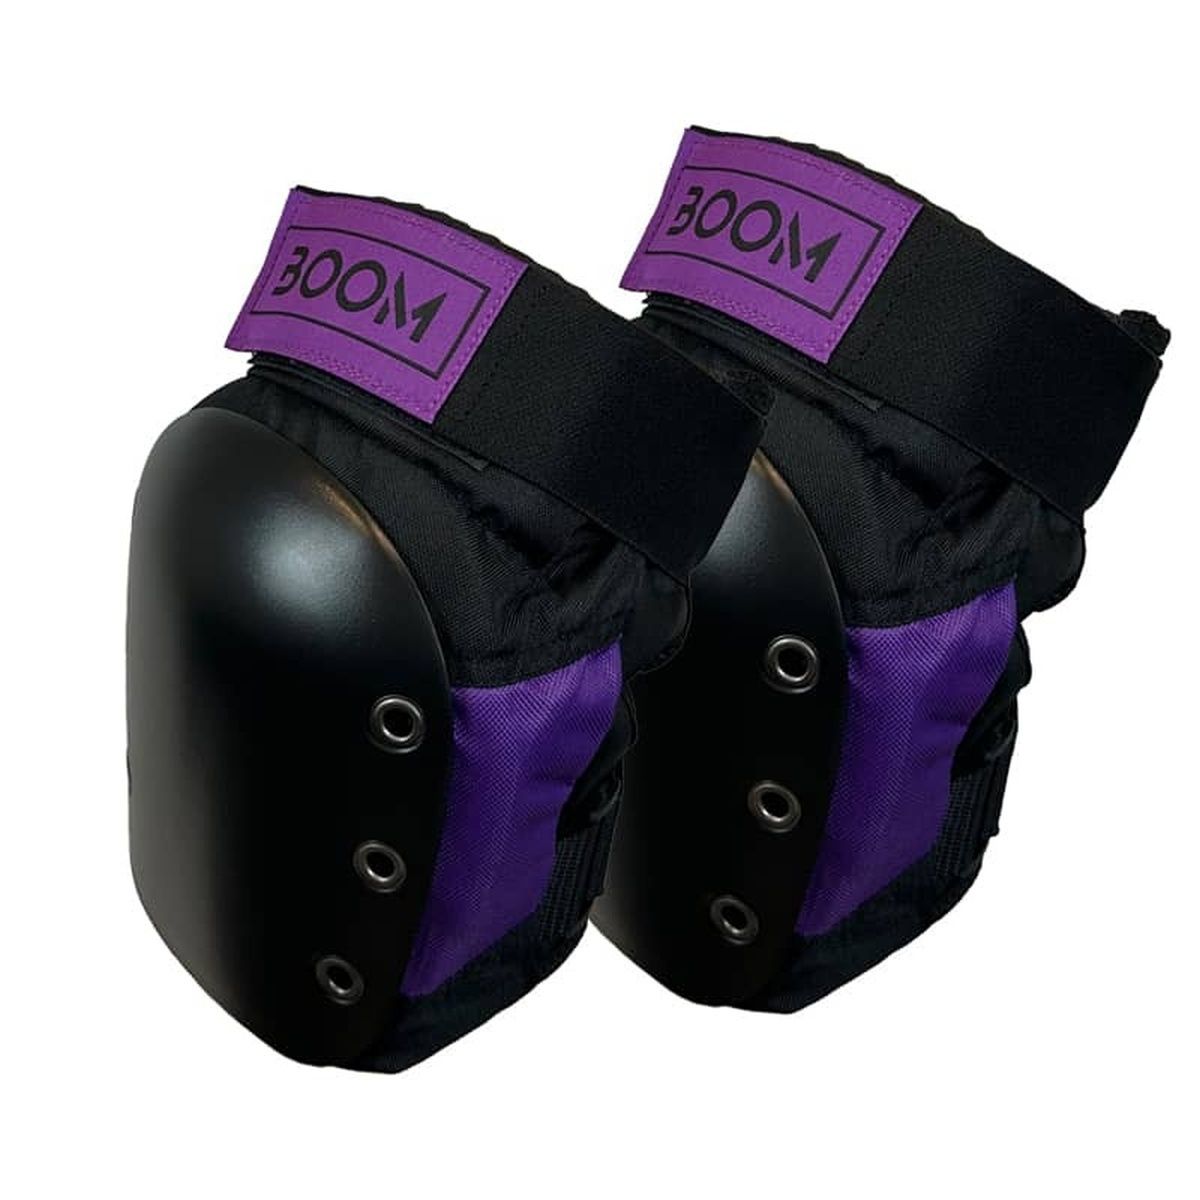 Ochraniacze kolan M solid purple Boom nowe